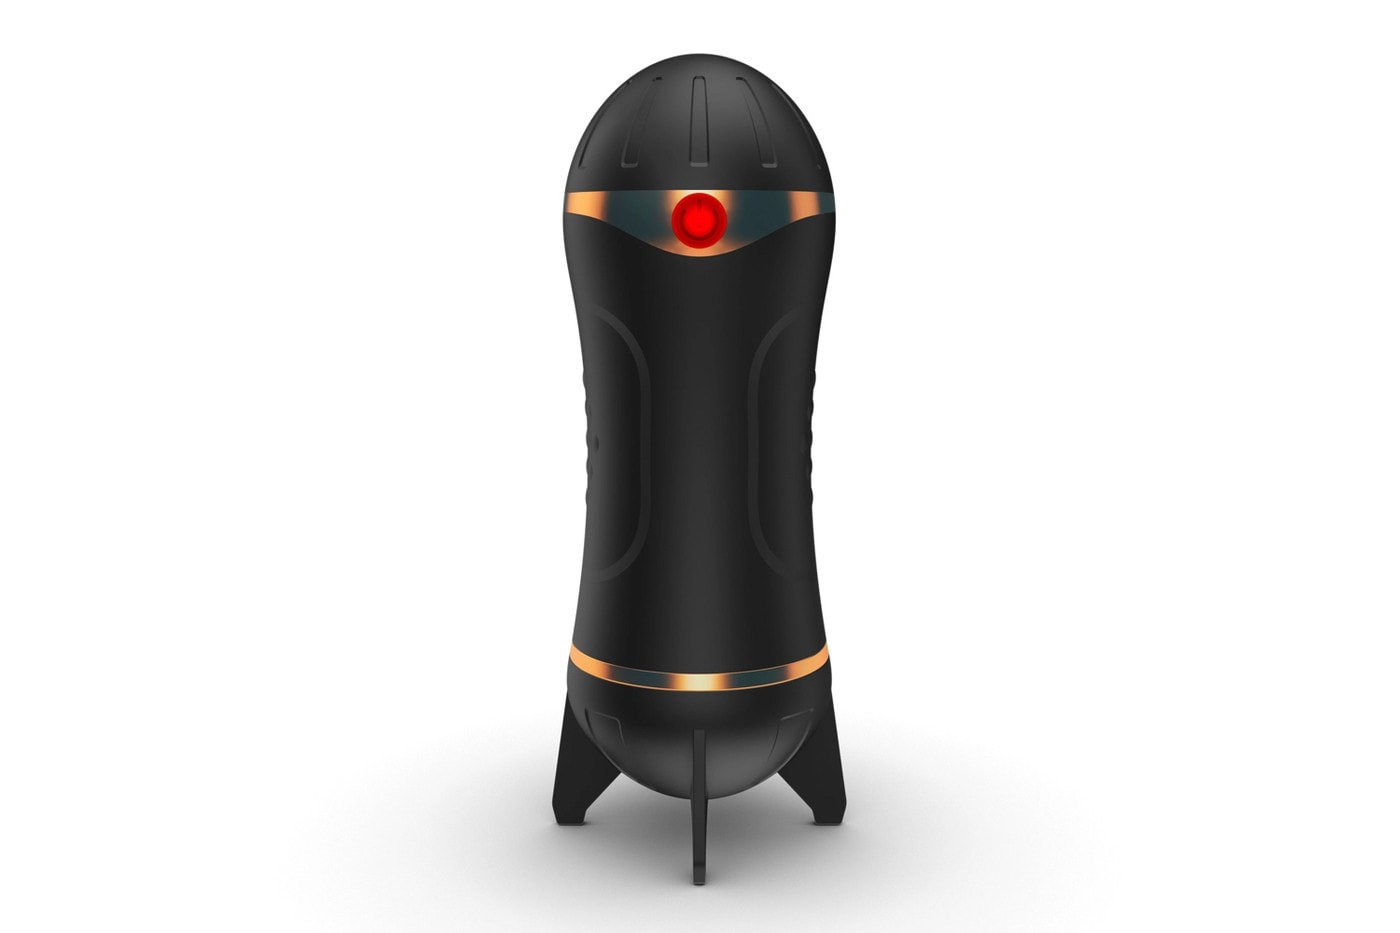 Tracy’s Dog 推出全新火箭造型「高科技」男性情趣玩具